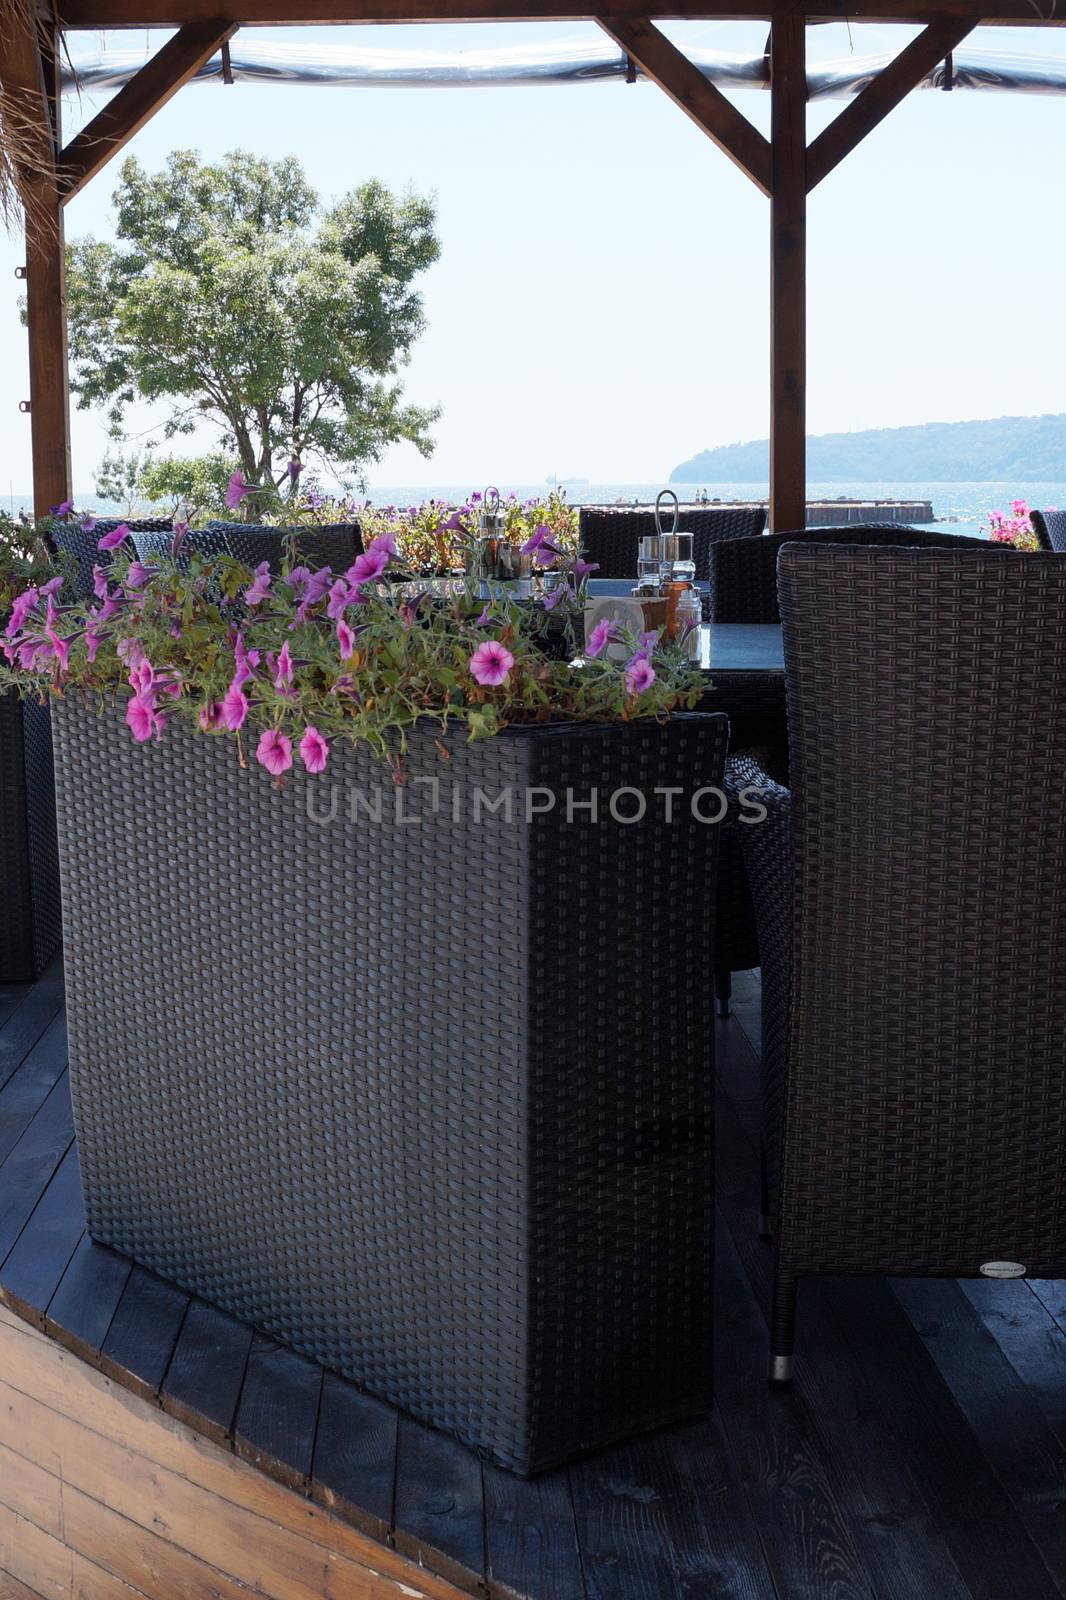 large wicker flowerpot with ampel flowers in a summer seaside cafe